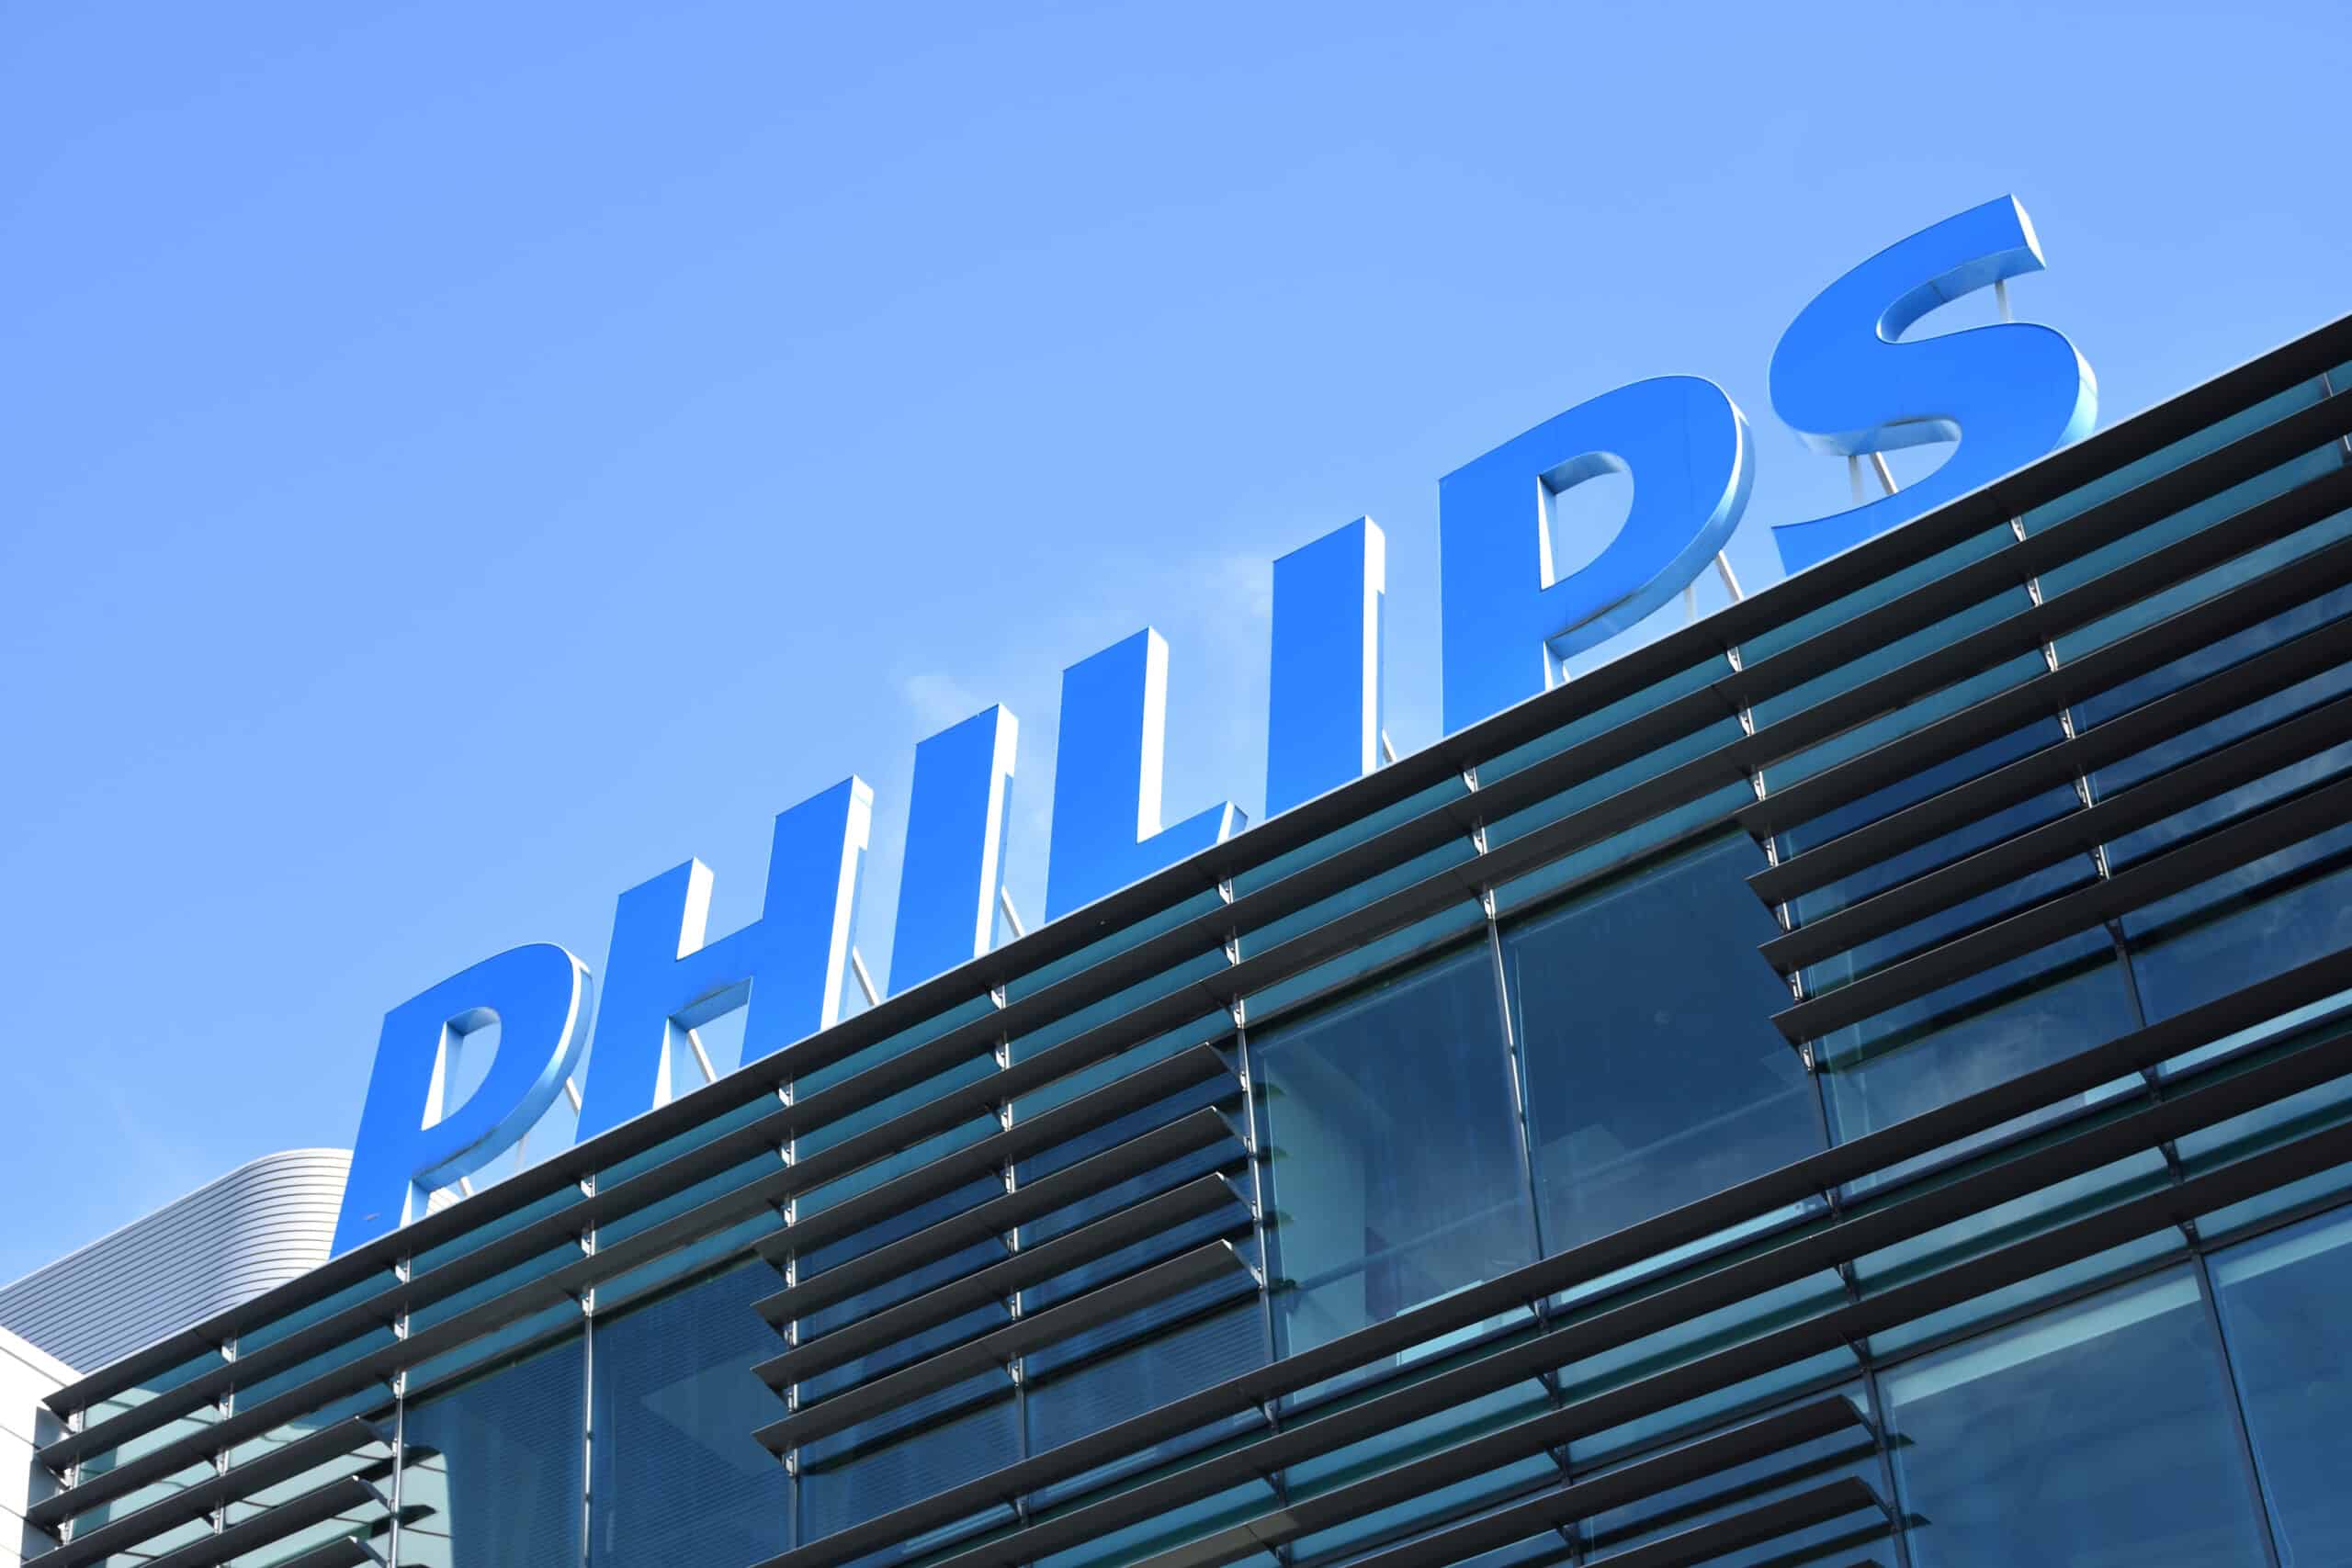 Building facade with Philips logo